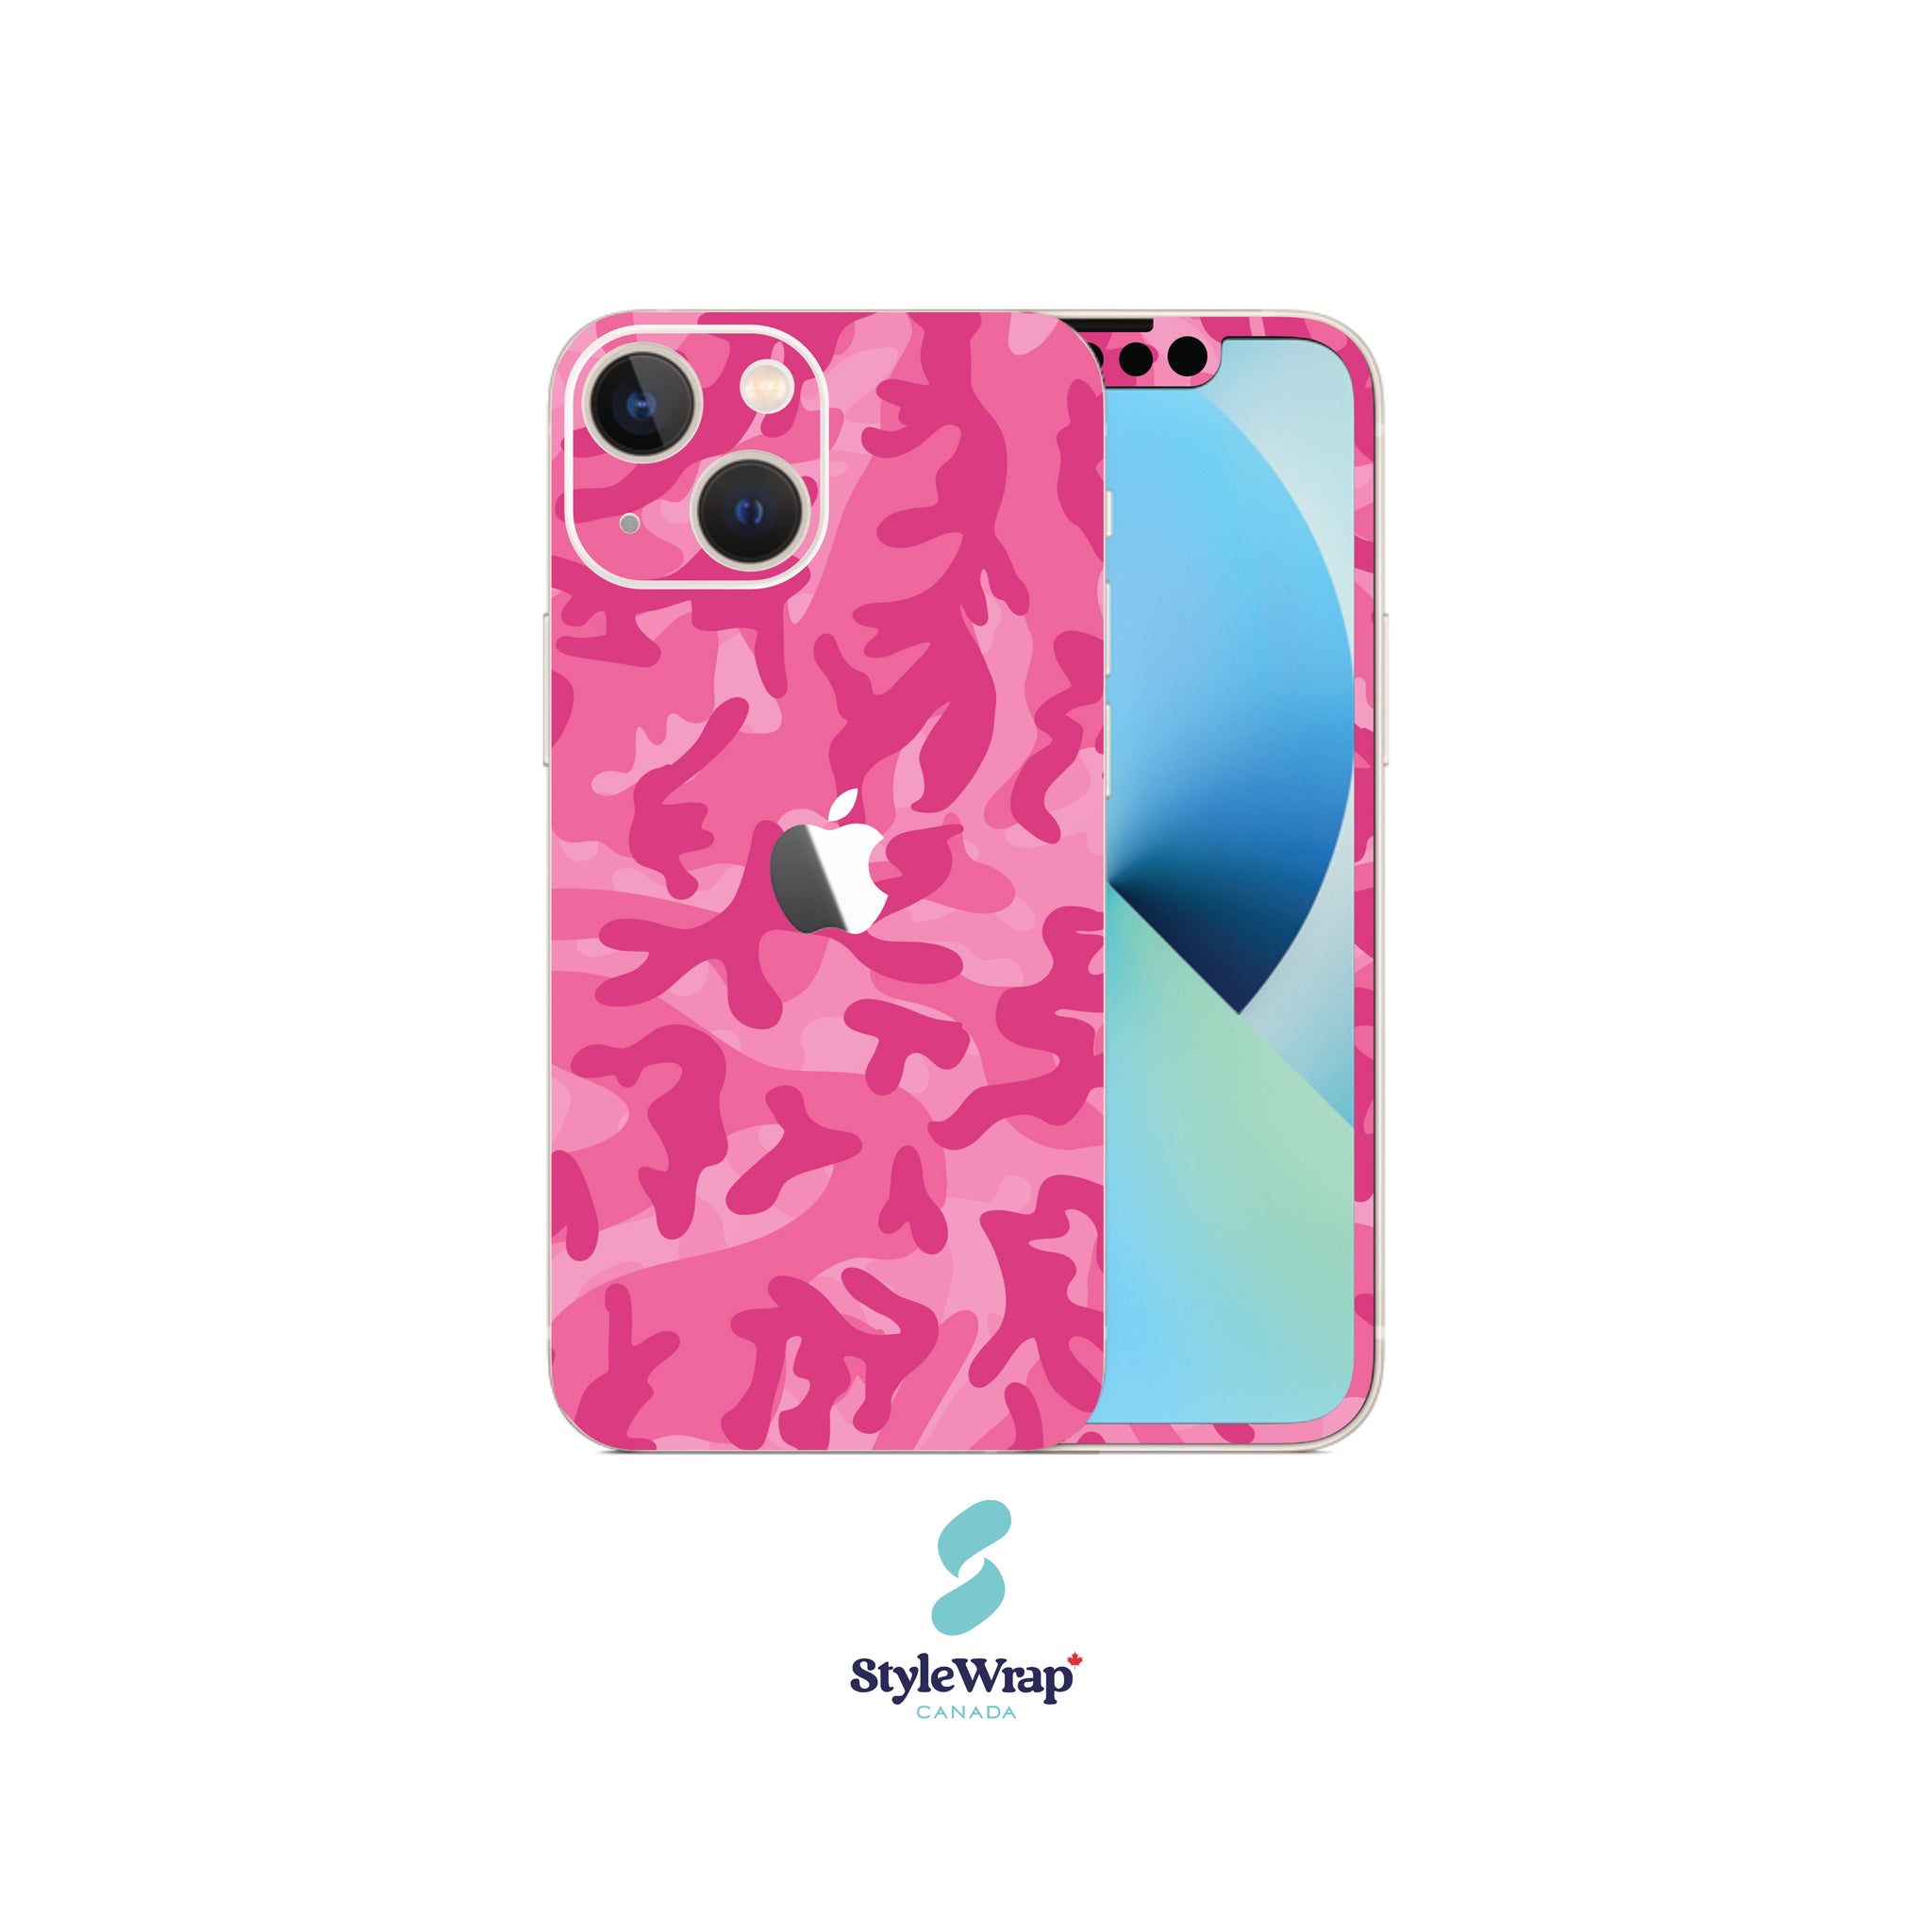 iPhone - Pink Camo